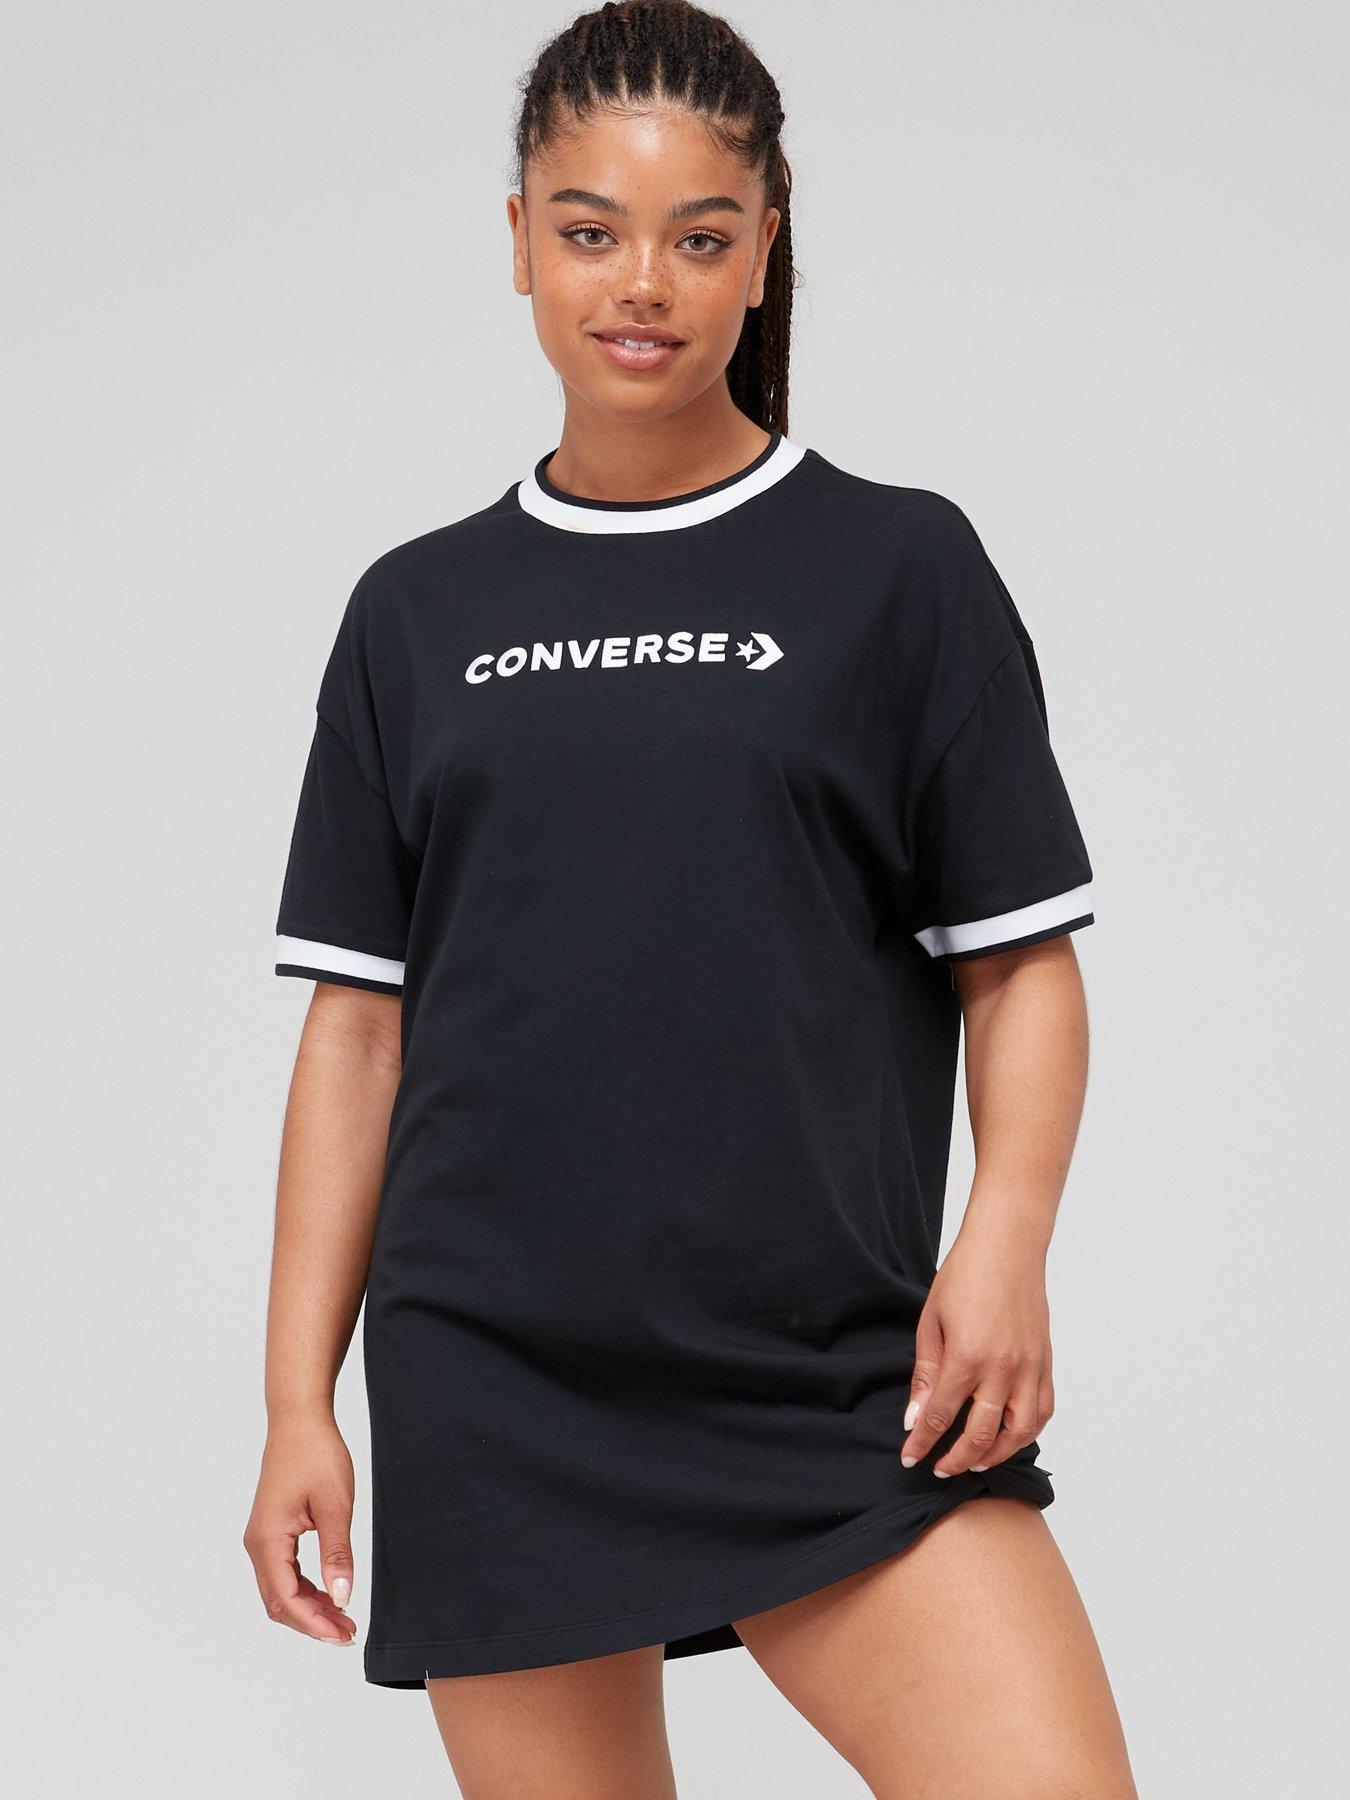 Wordmark Converse T-Shirt Black Dress -